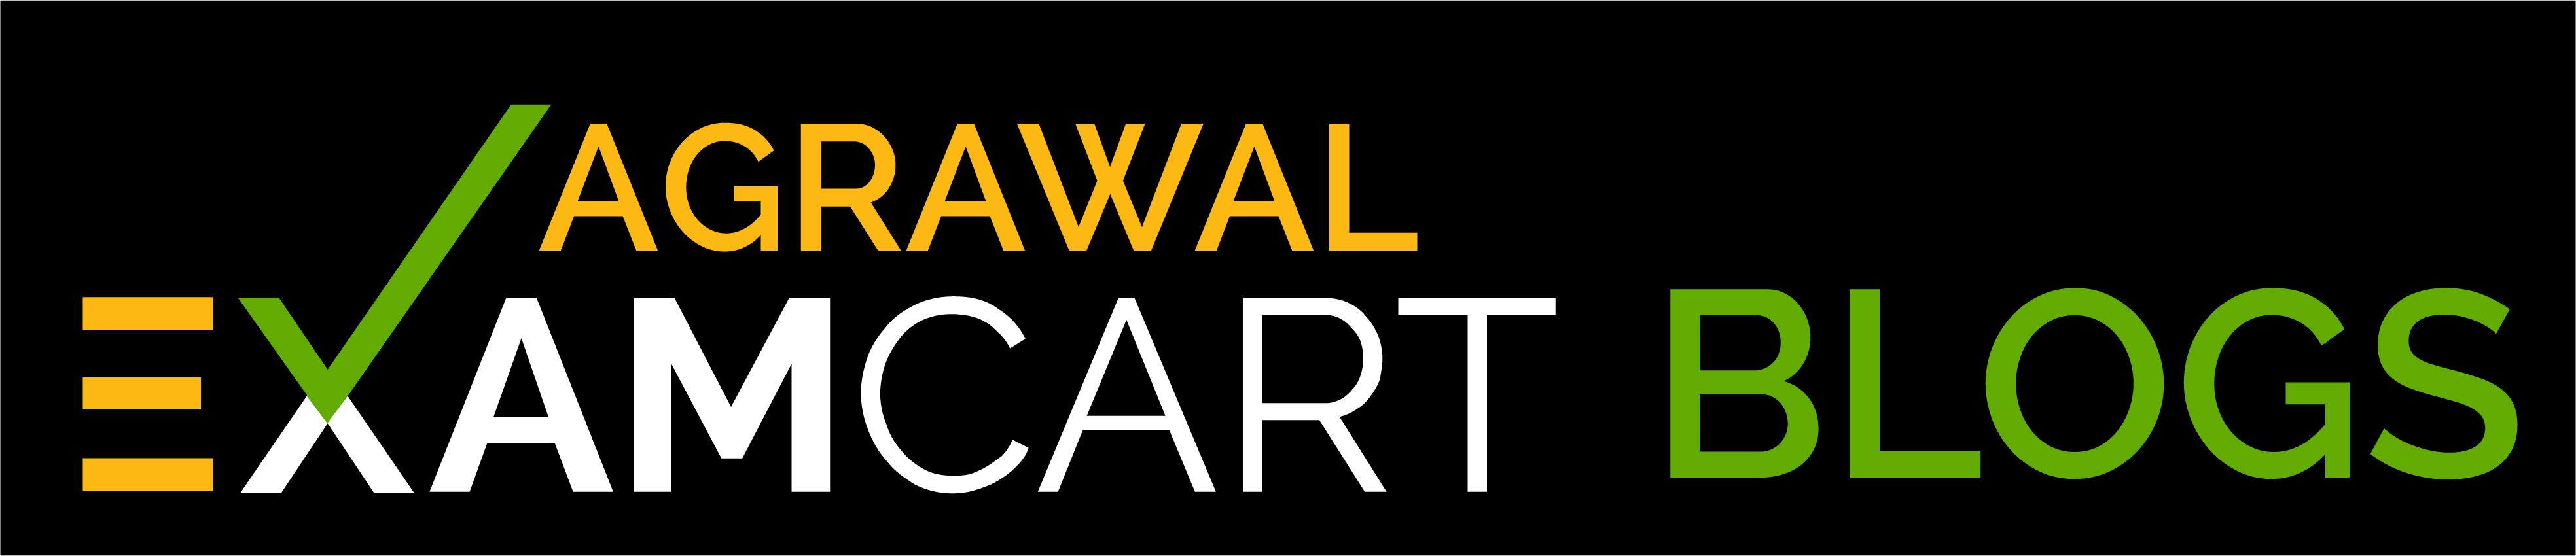 examcart logo